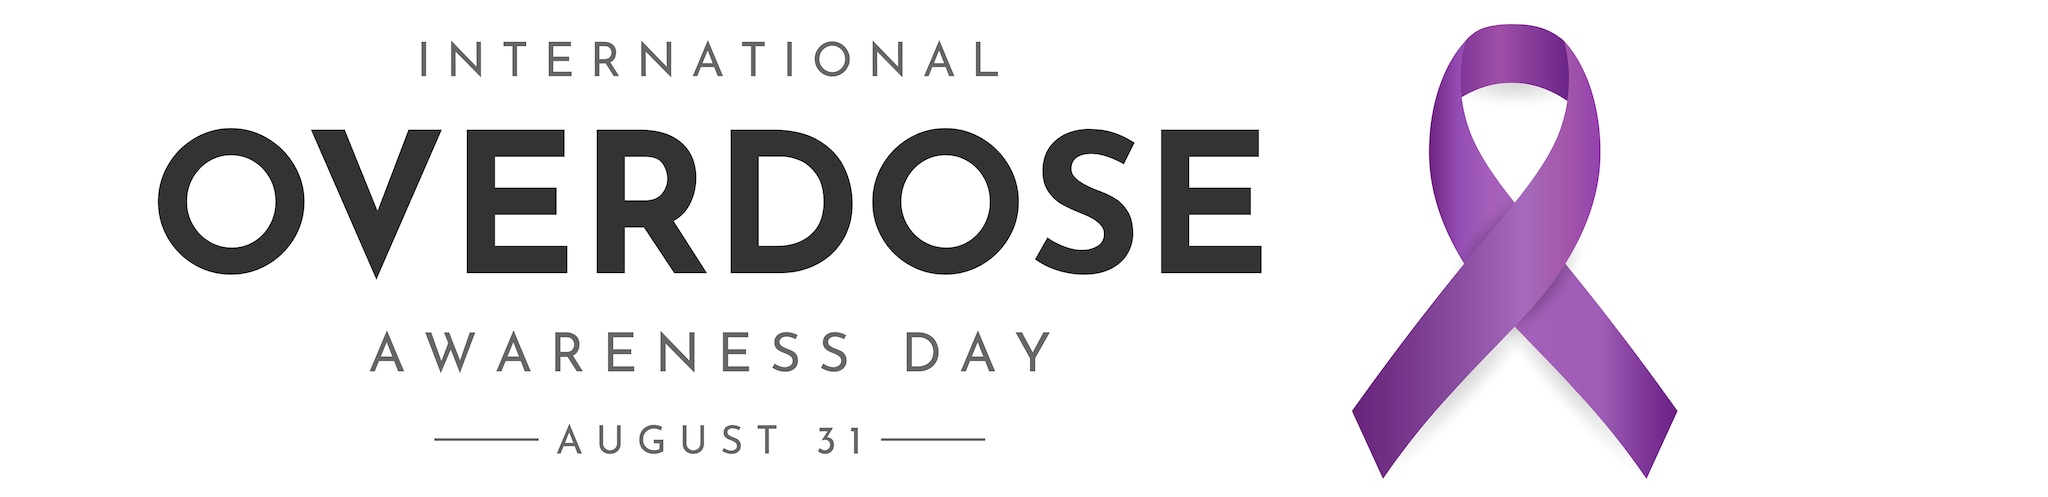 International Overdose Awareness Day, August 31.